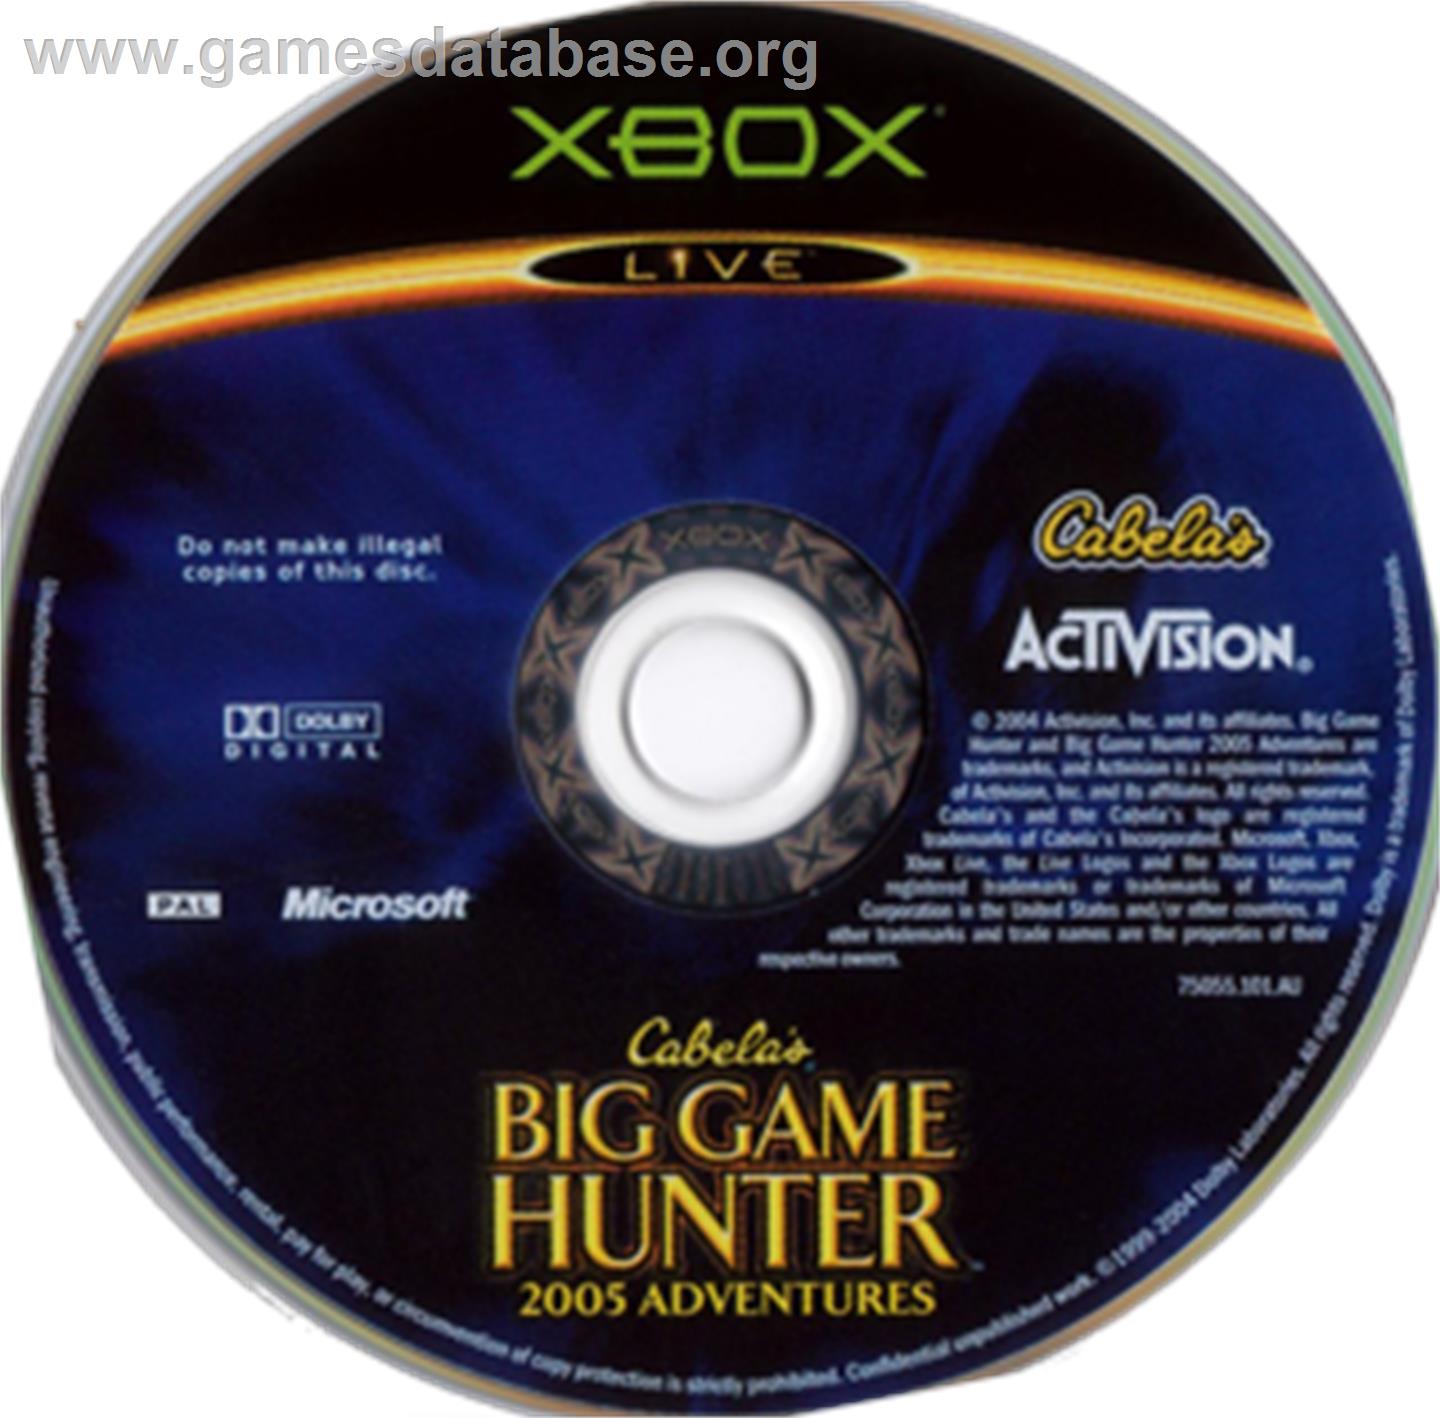 Cabela's Big Game Hunter 2005 Adventures - Microsoft Xbox - Artwork - CD